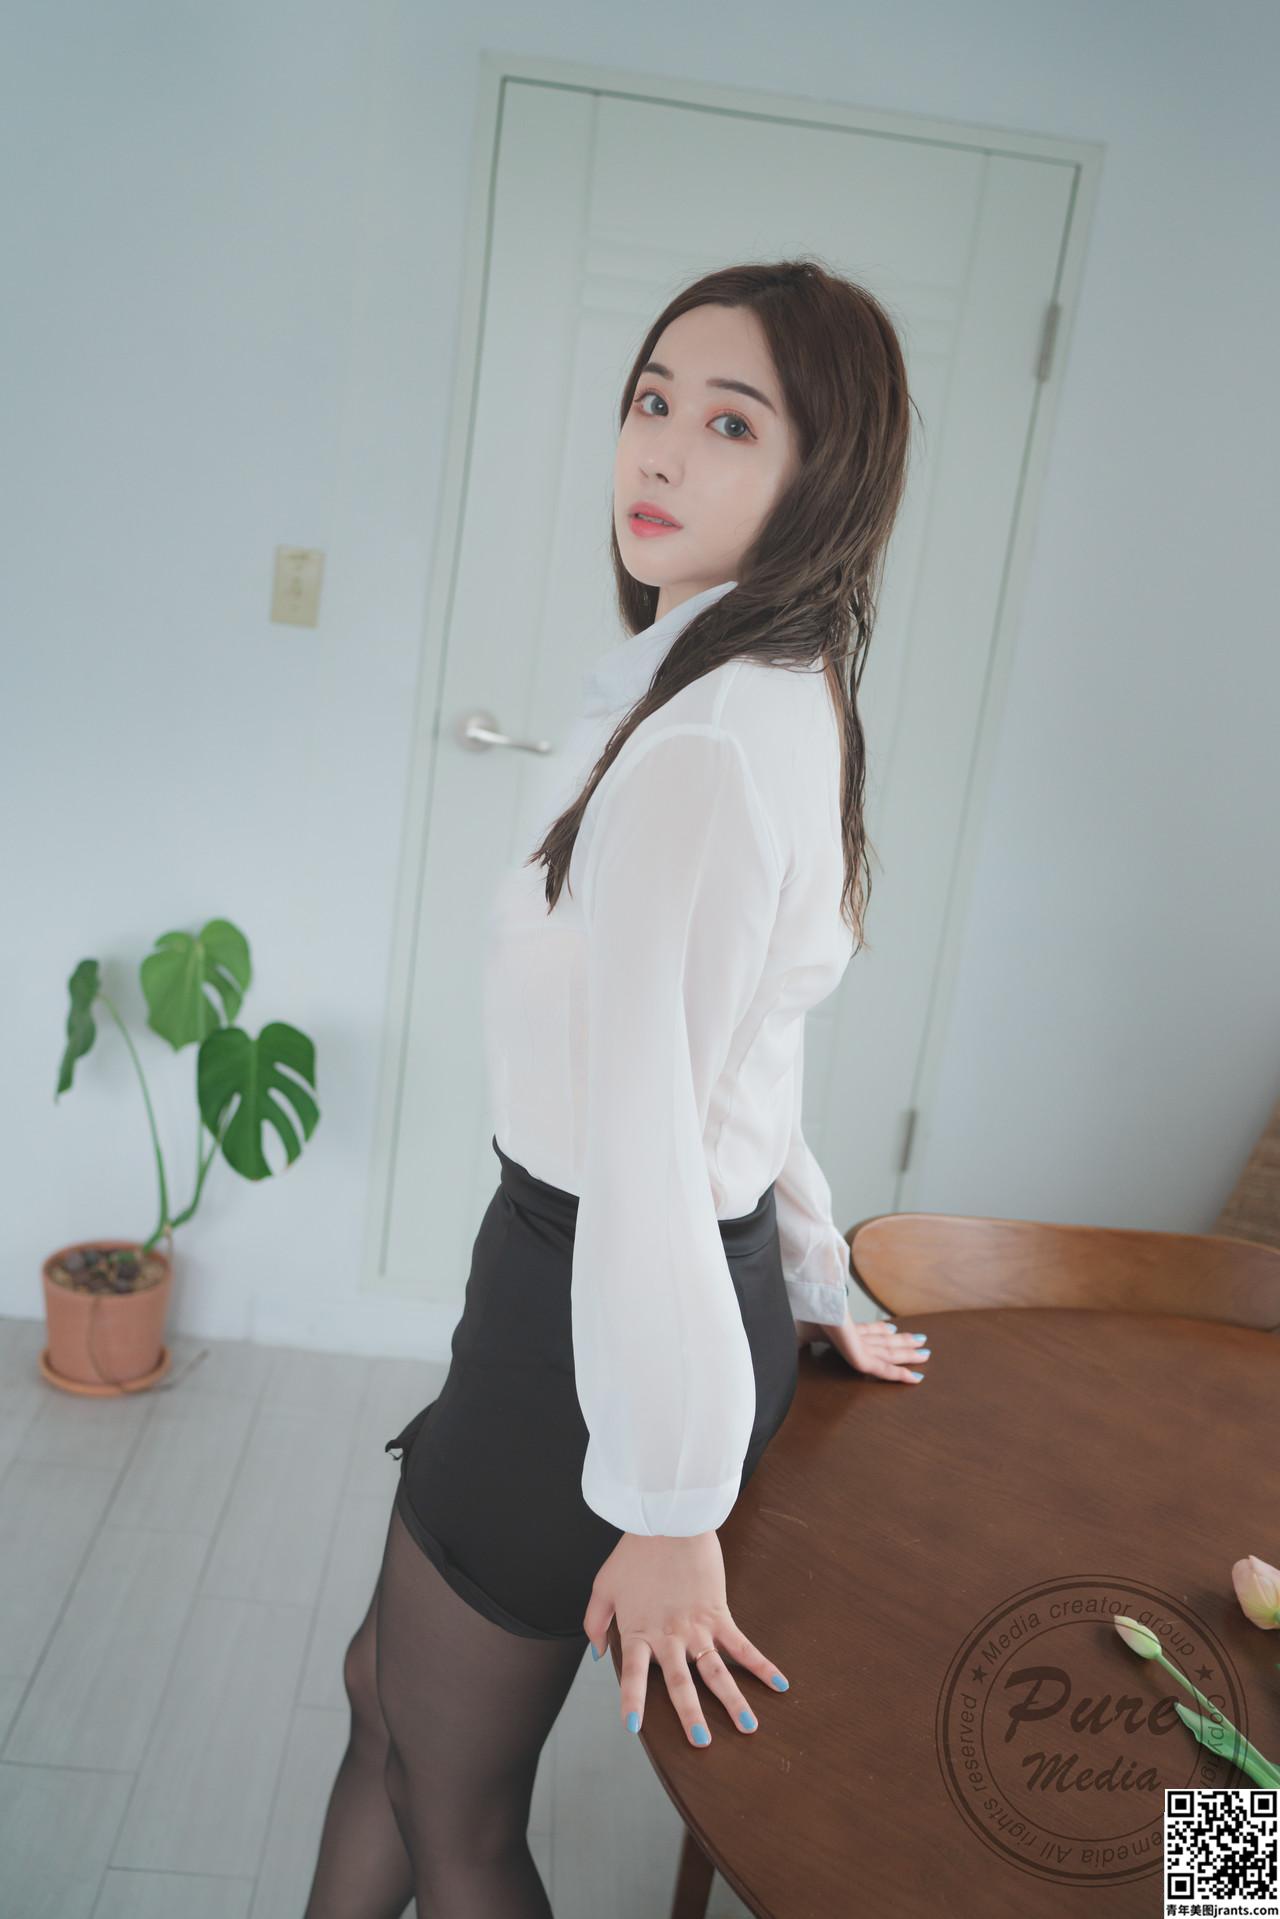 [Dohee] 韩国正妹鲜嫩又饱满 网看硬了 (83P)